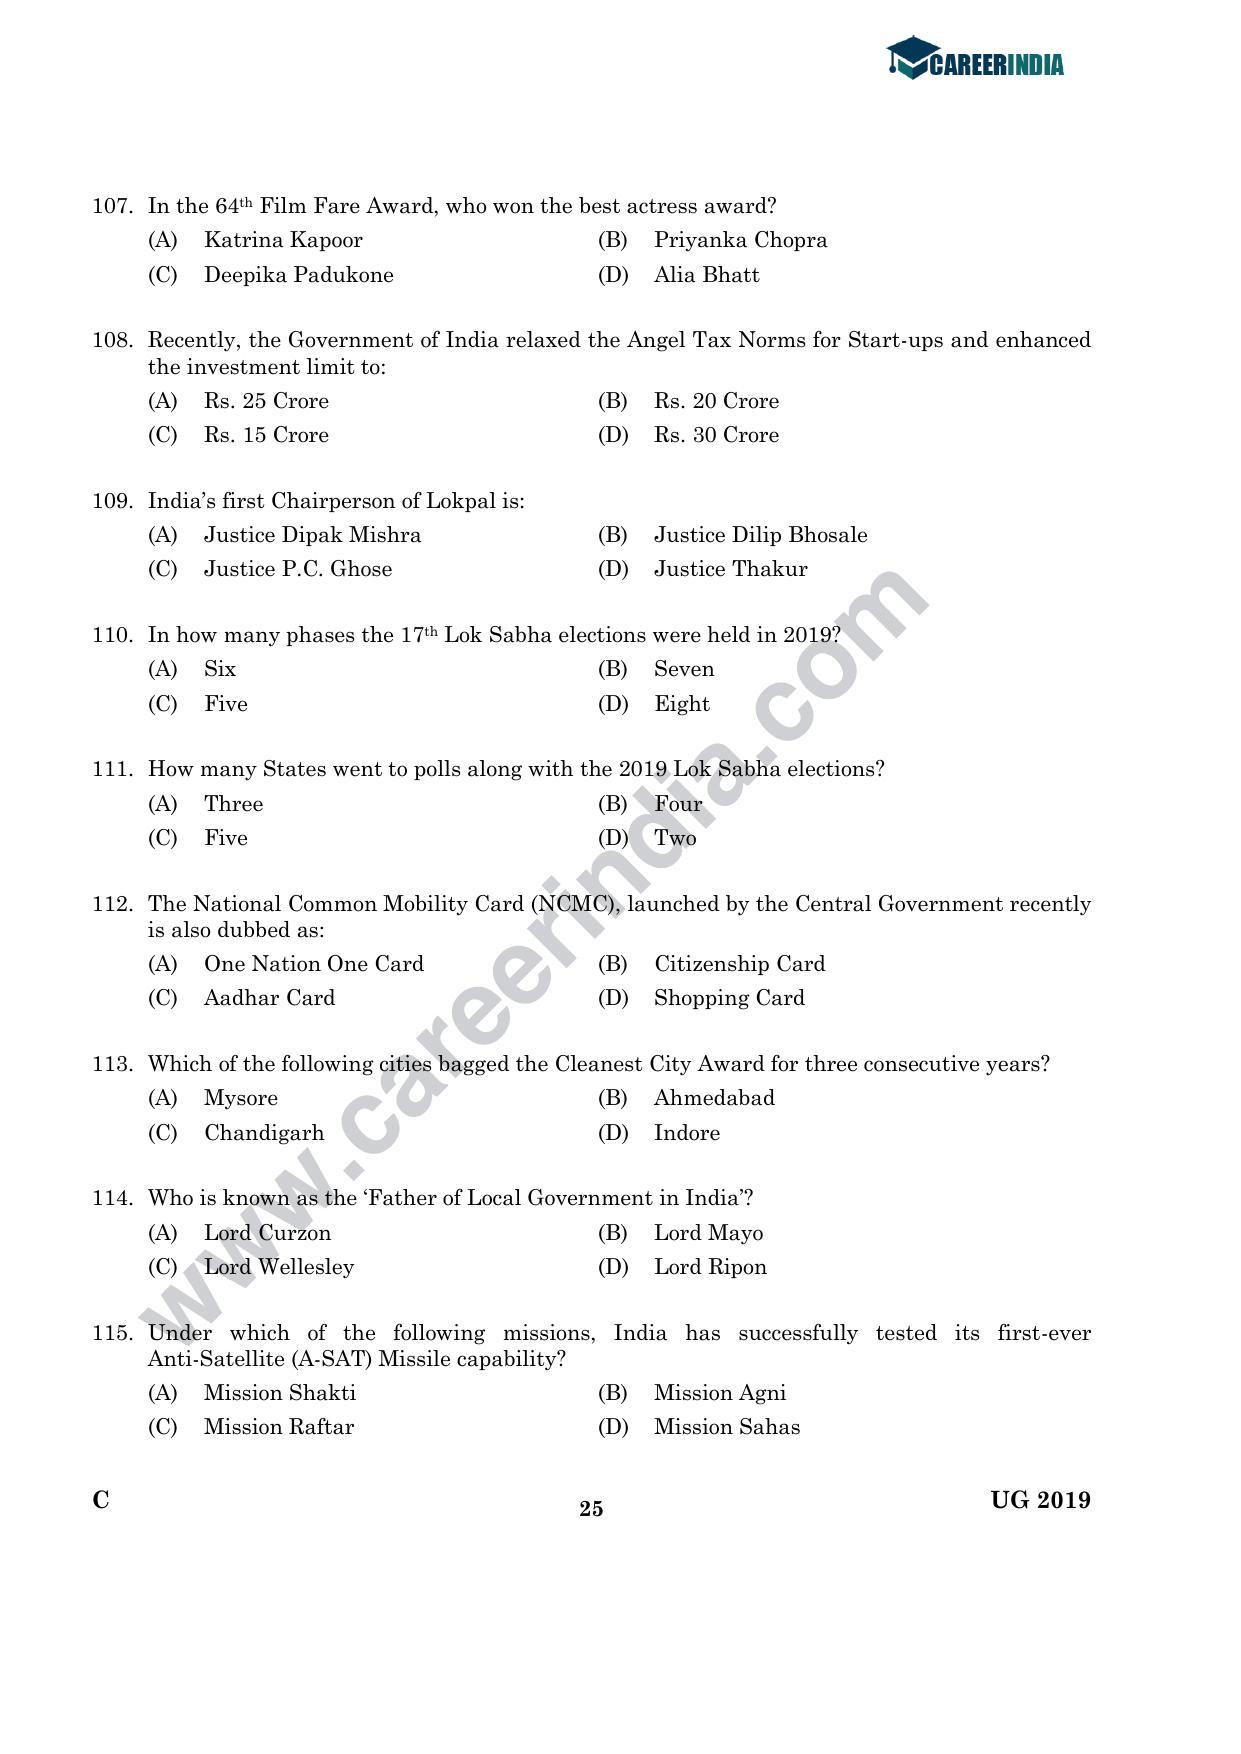 CLAT 2019 UG Legal-Aptitude Question Paper - Page 24